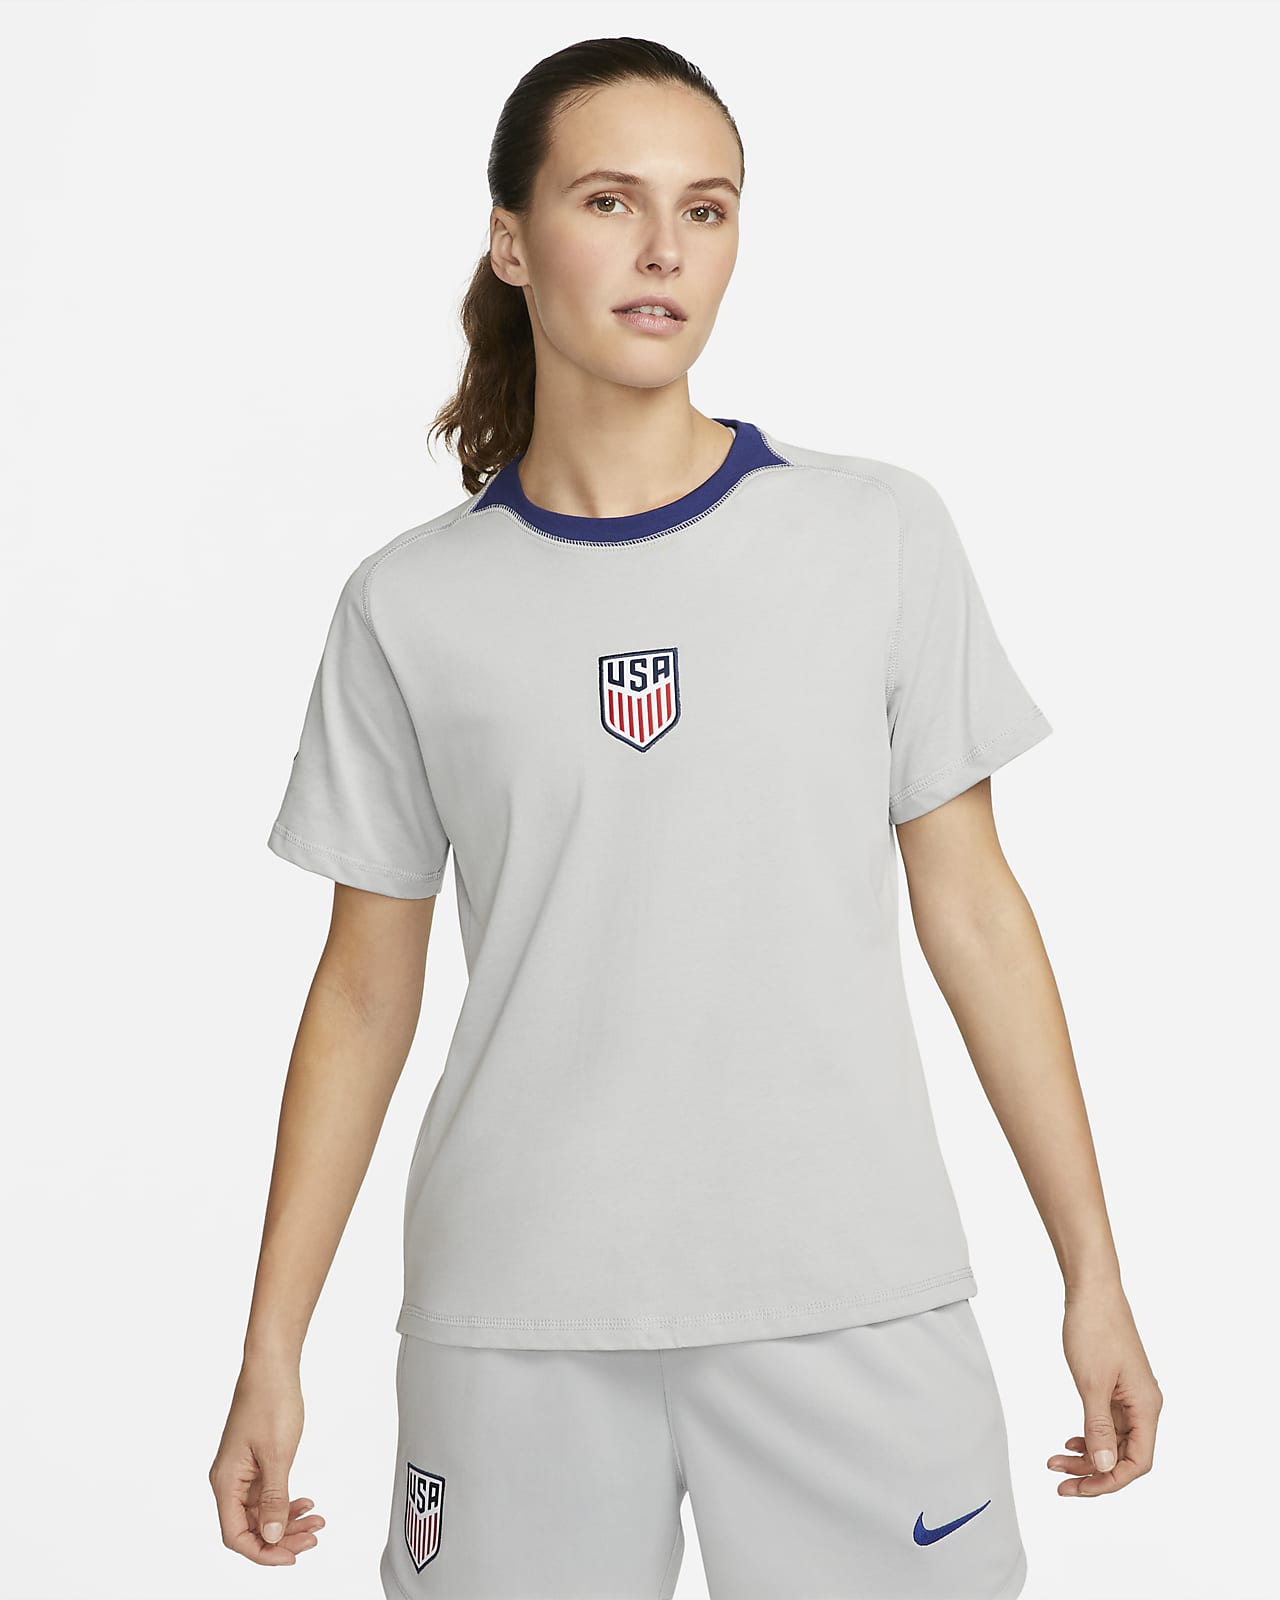 Playera fútbol Nike para mujer Estados Nike.com